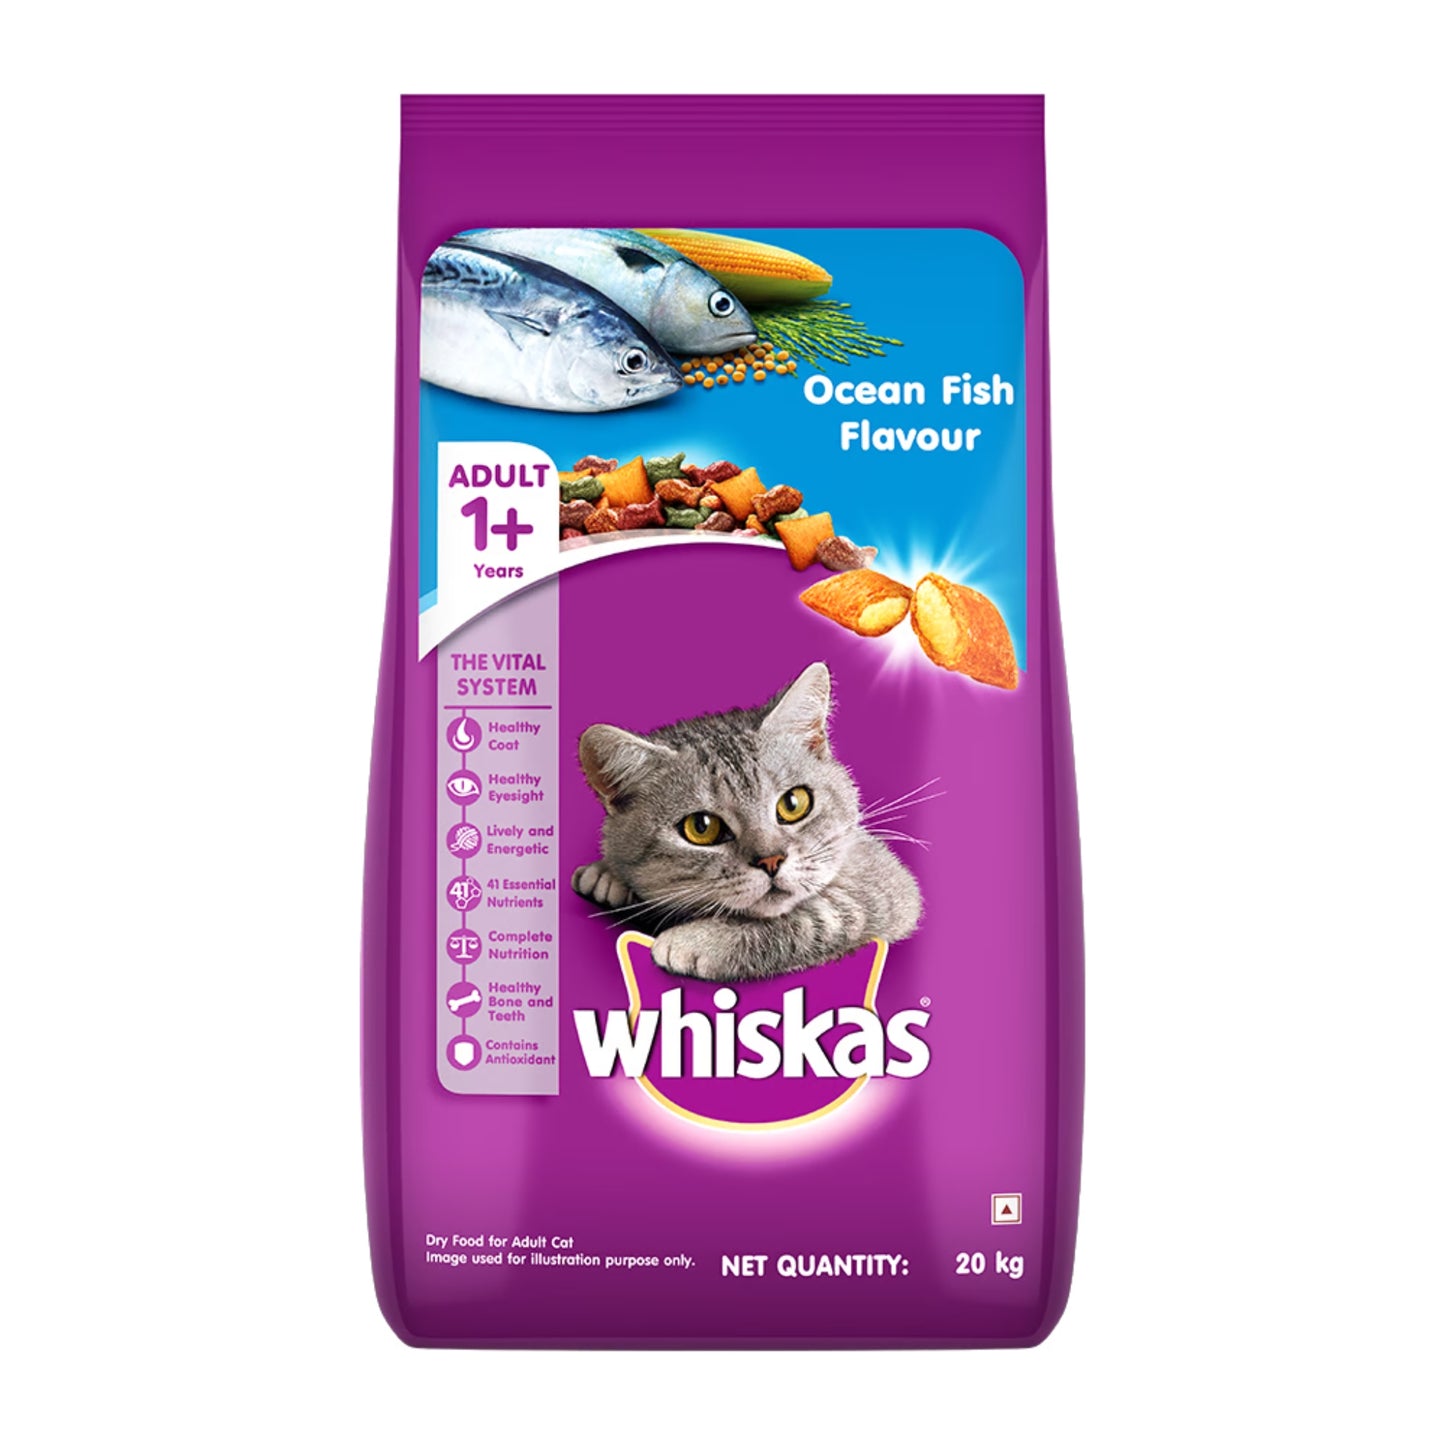 Whiskas Adult Dry Cat Food, Ocean Fish Flavor, 20Kg